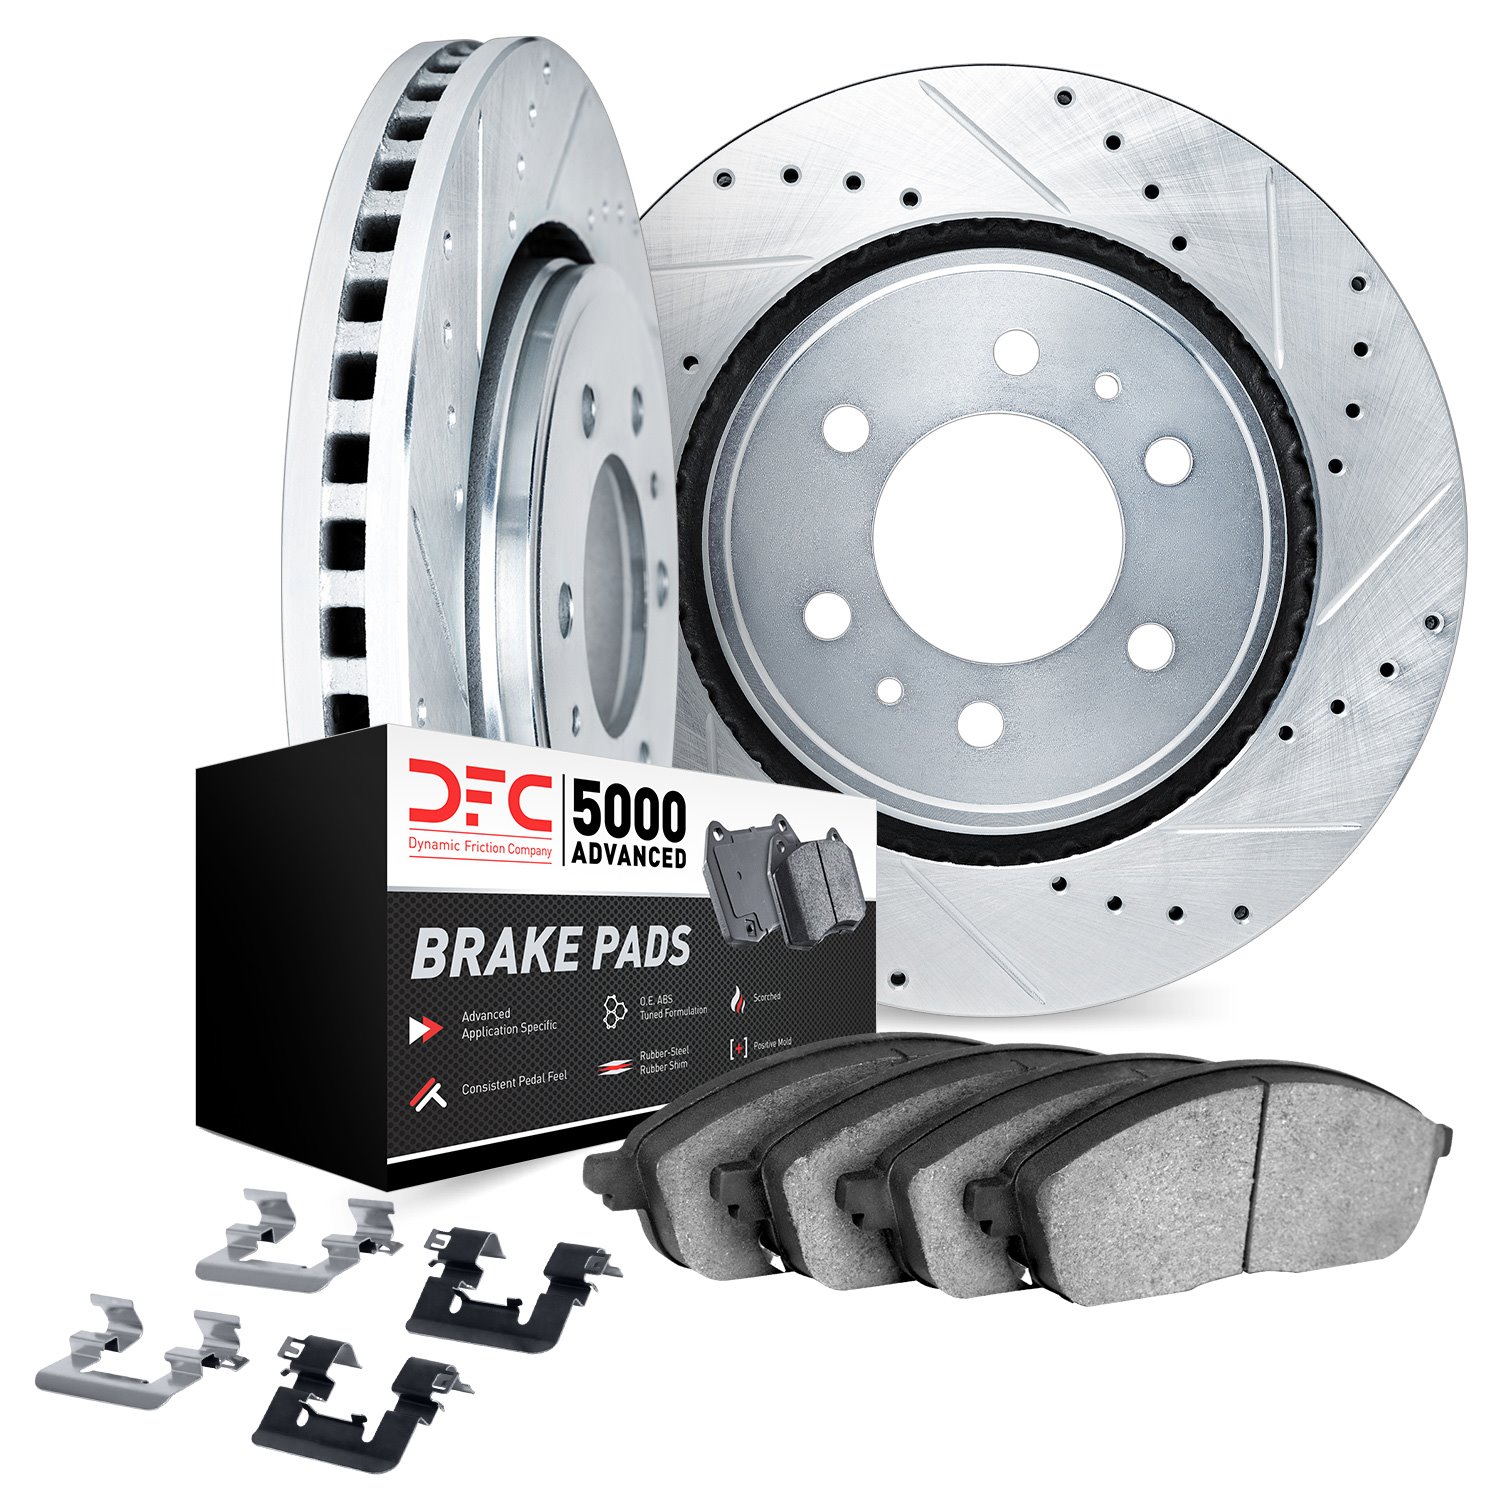 7512-63499 Drilled/Slotted Brake Rotors w/5000 Advanced Brake Pads Kit & Hardware [Silver], Fits Select Multiple Makes/Models, P